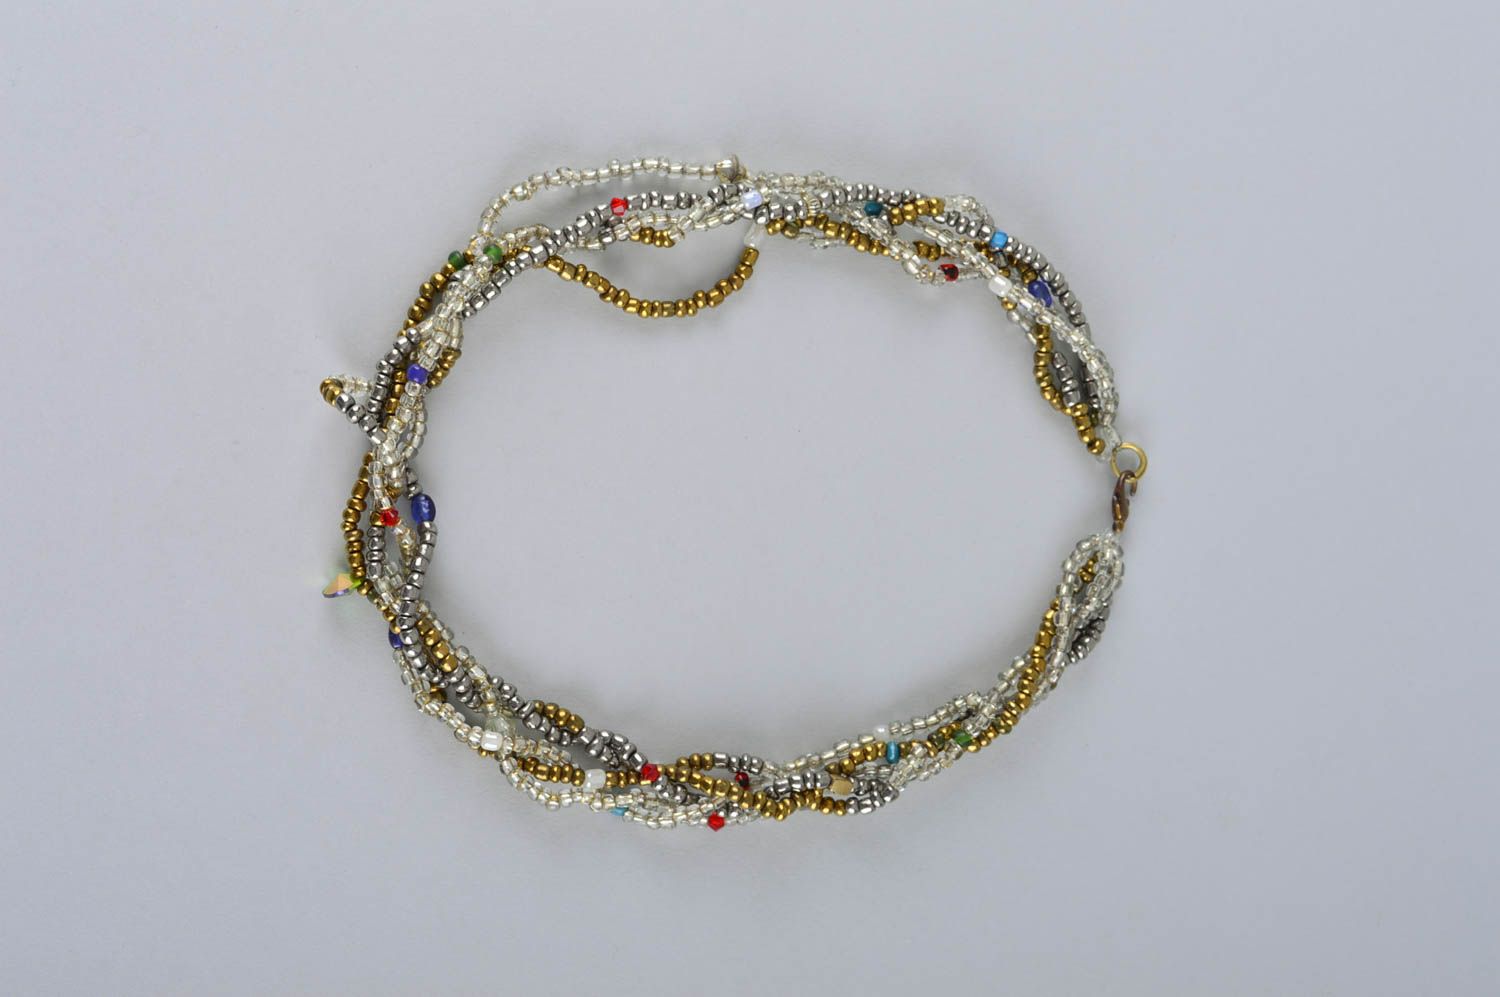 Handmade beaded necklace and bracelet designer stylish jewelry set for woman photo 2